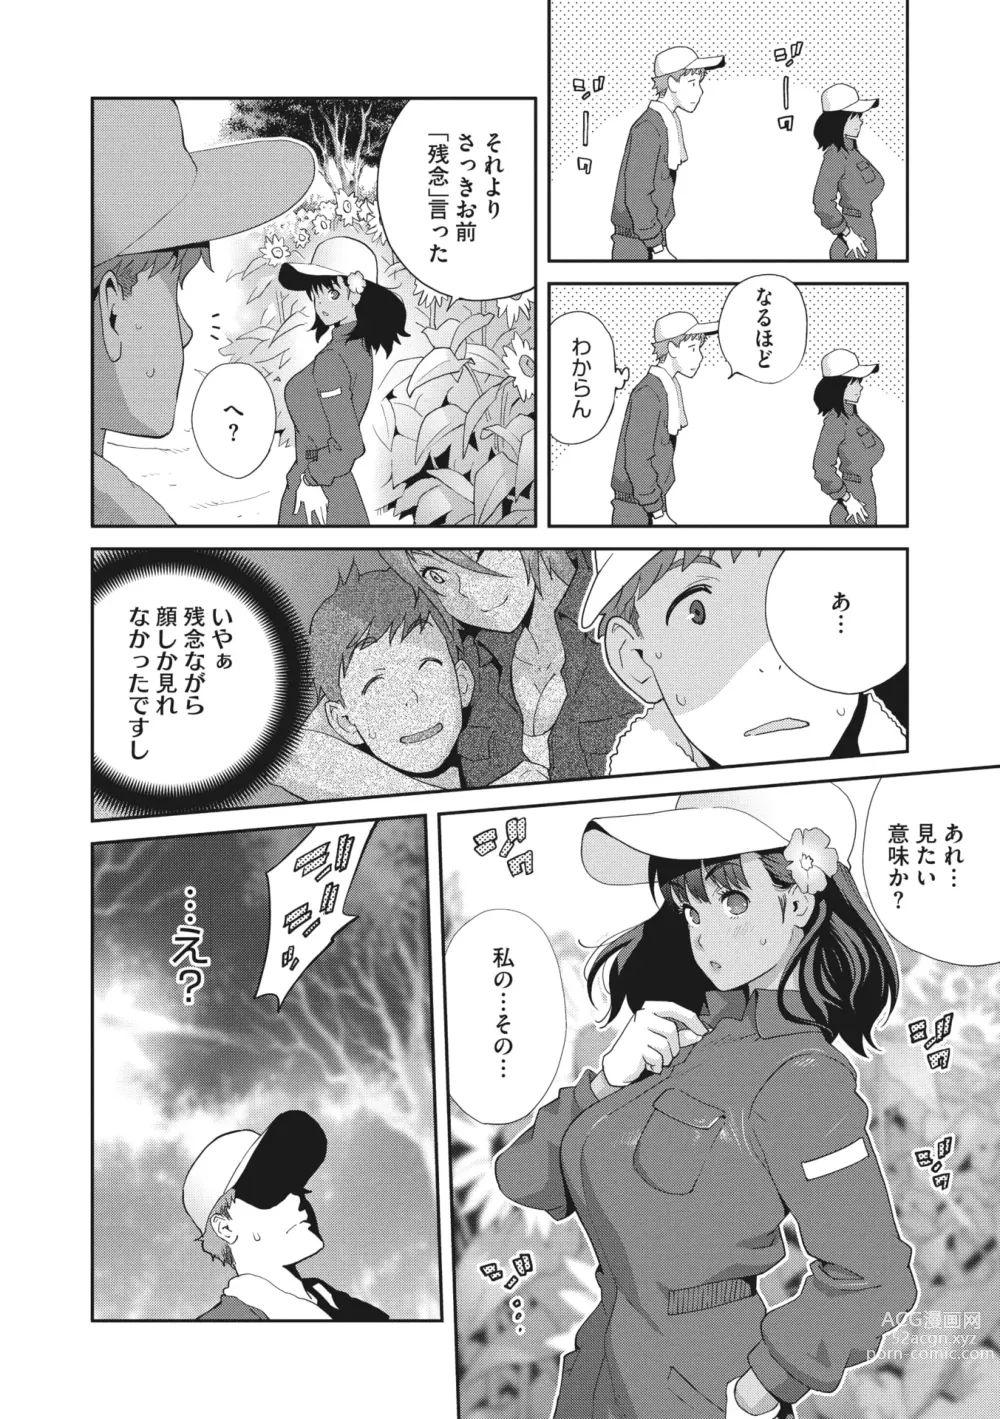 Page 8 of manga Kimama Tawawa Manana 1-4